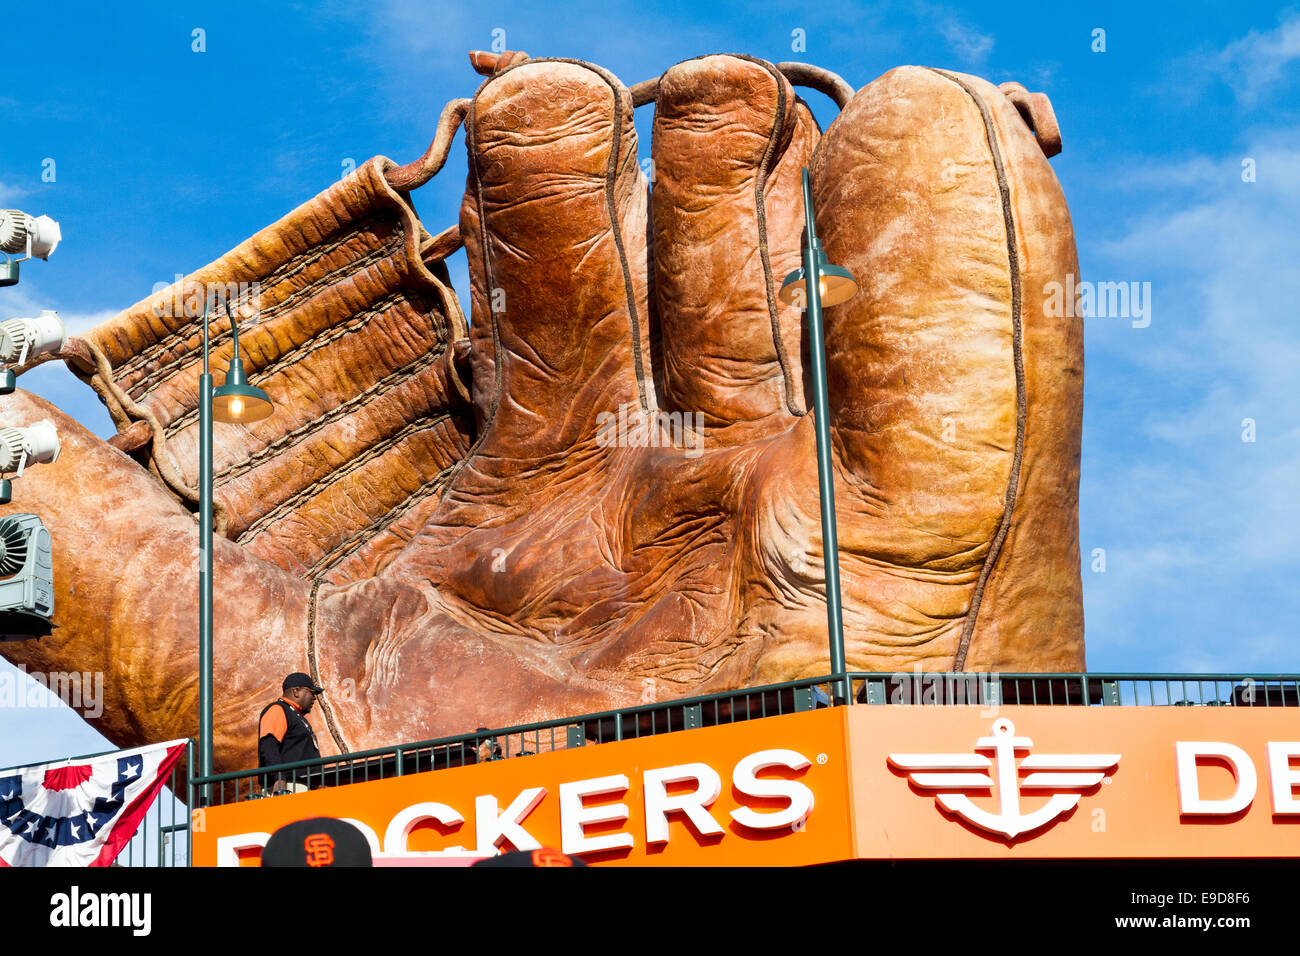 Riesige Baseball Handschuh im AT&T Park, Heimat der San Francisco Giants Baseballteam Stockfoto